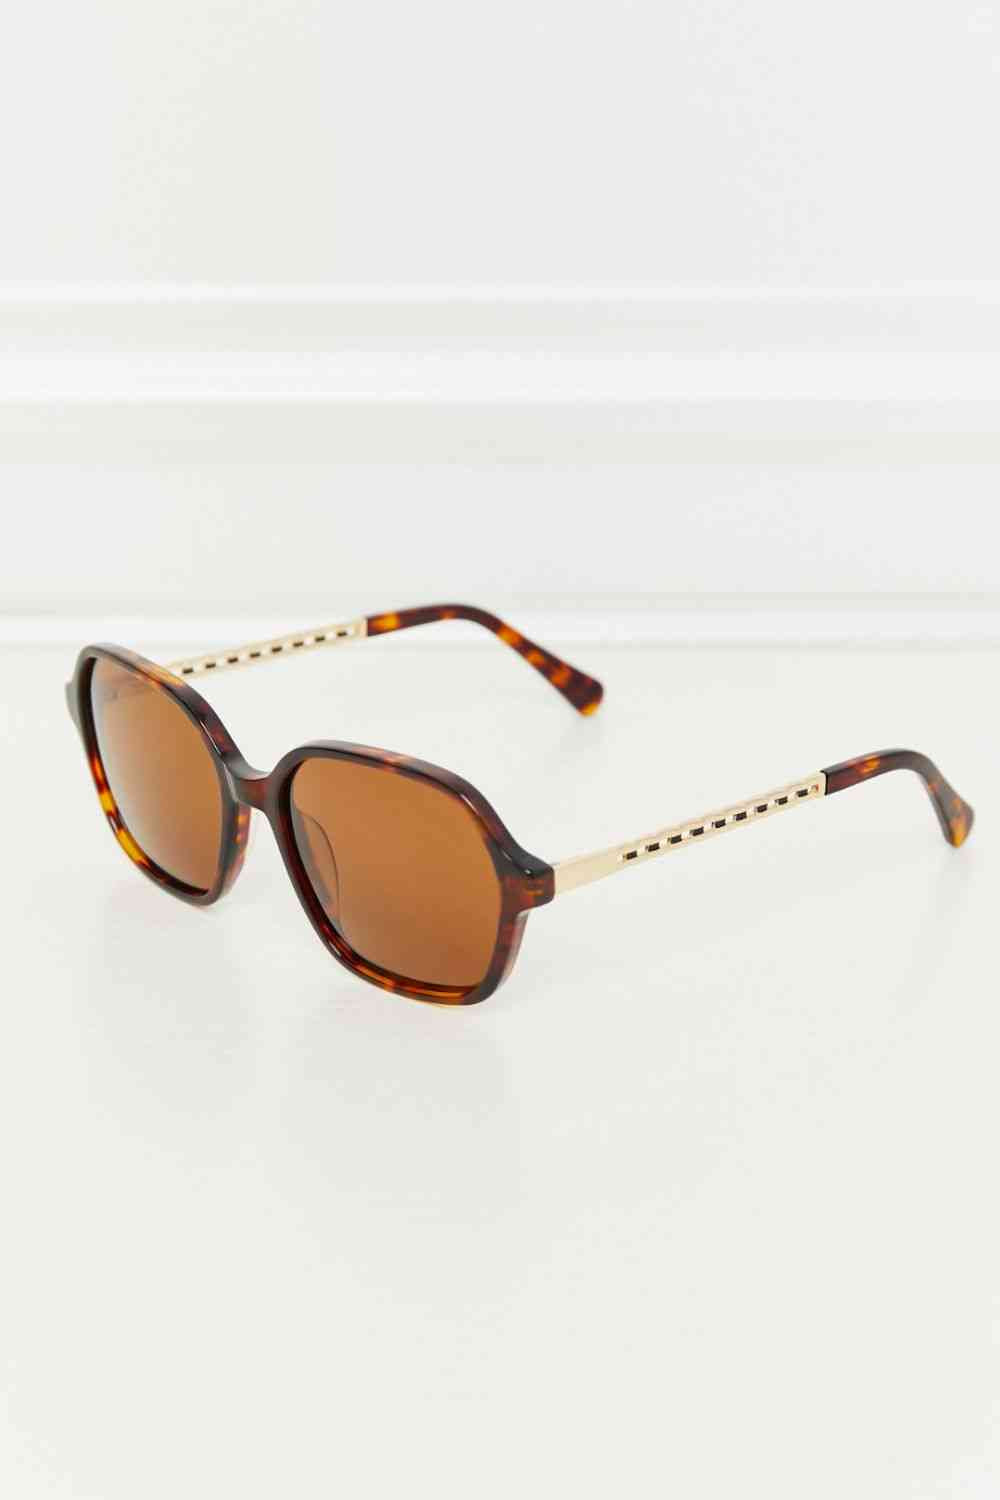 TAC Polarization Lens Full Rim Sunglasses - Victoria Royale Boutique, LLC.